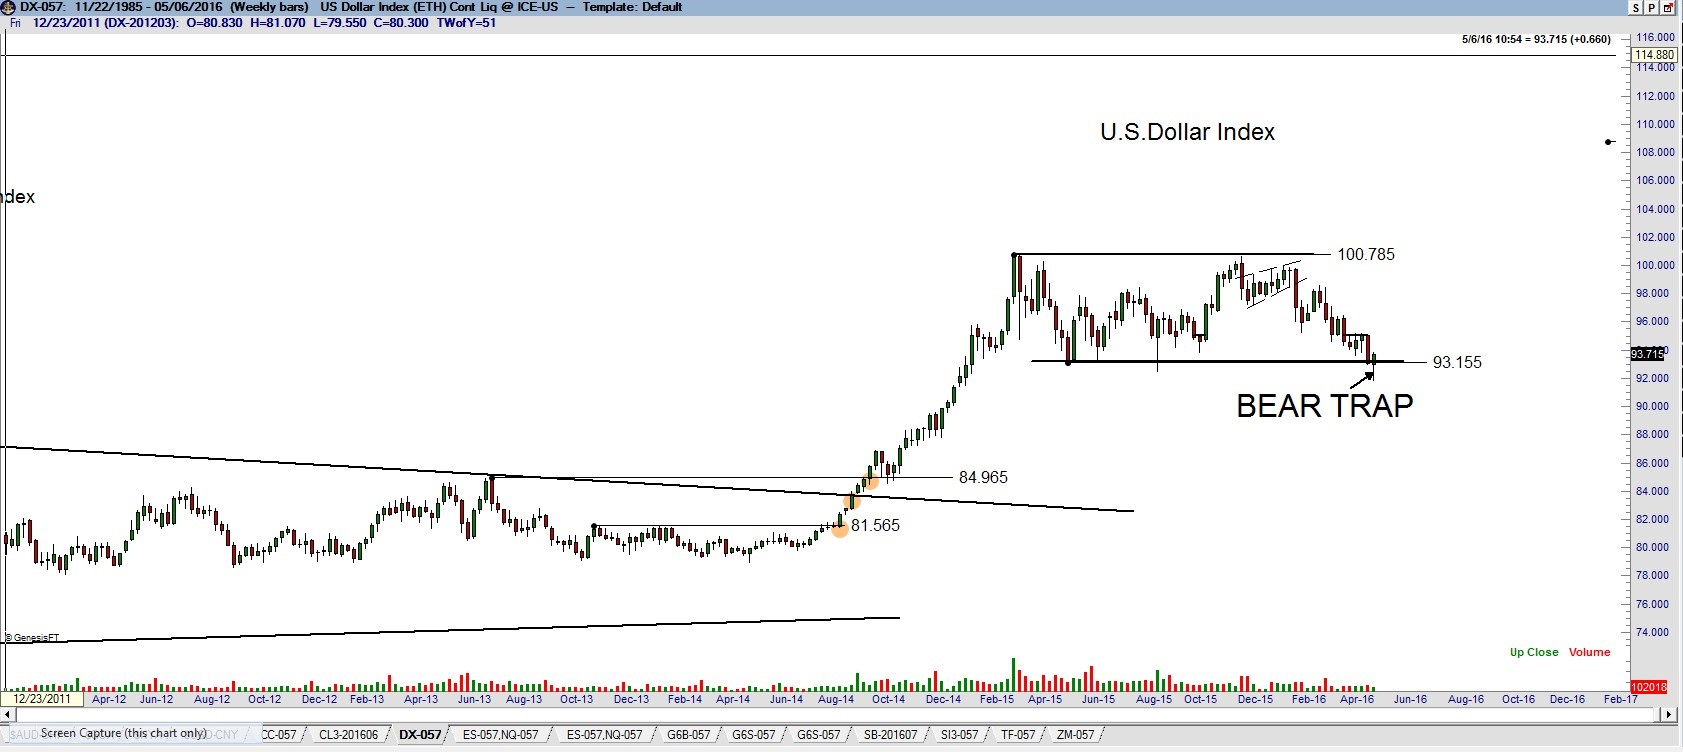 $USD bullish on the US dollar index - Peter brandt - Factor Trading 1